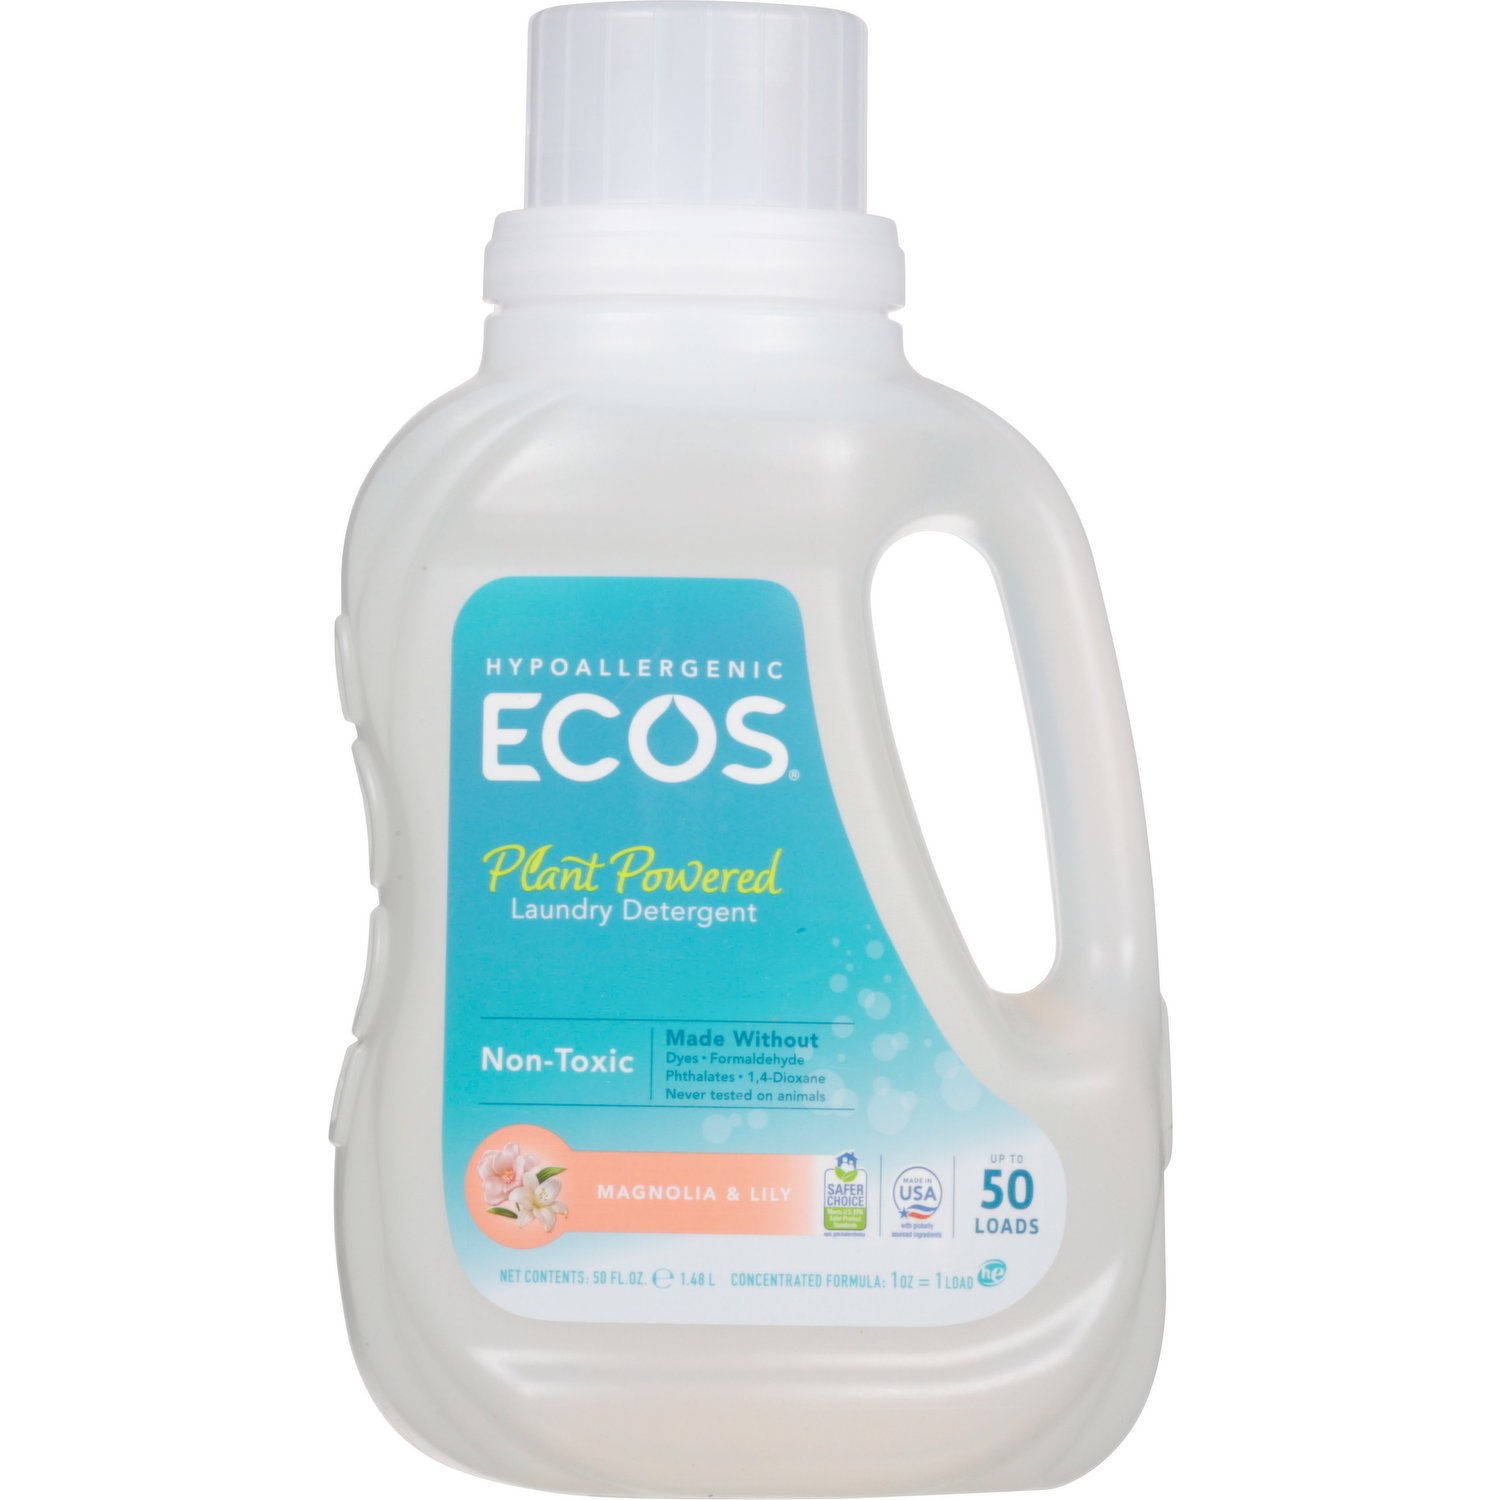 ECOS Hypoallergenic Plant-Powered Laundry Detergent